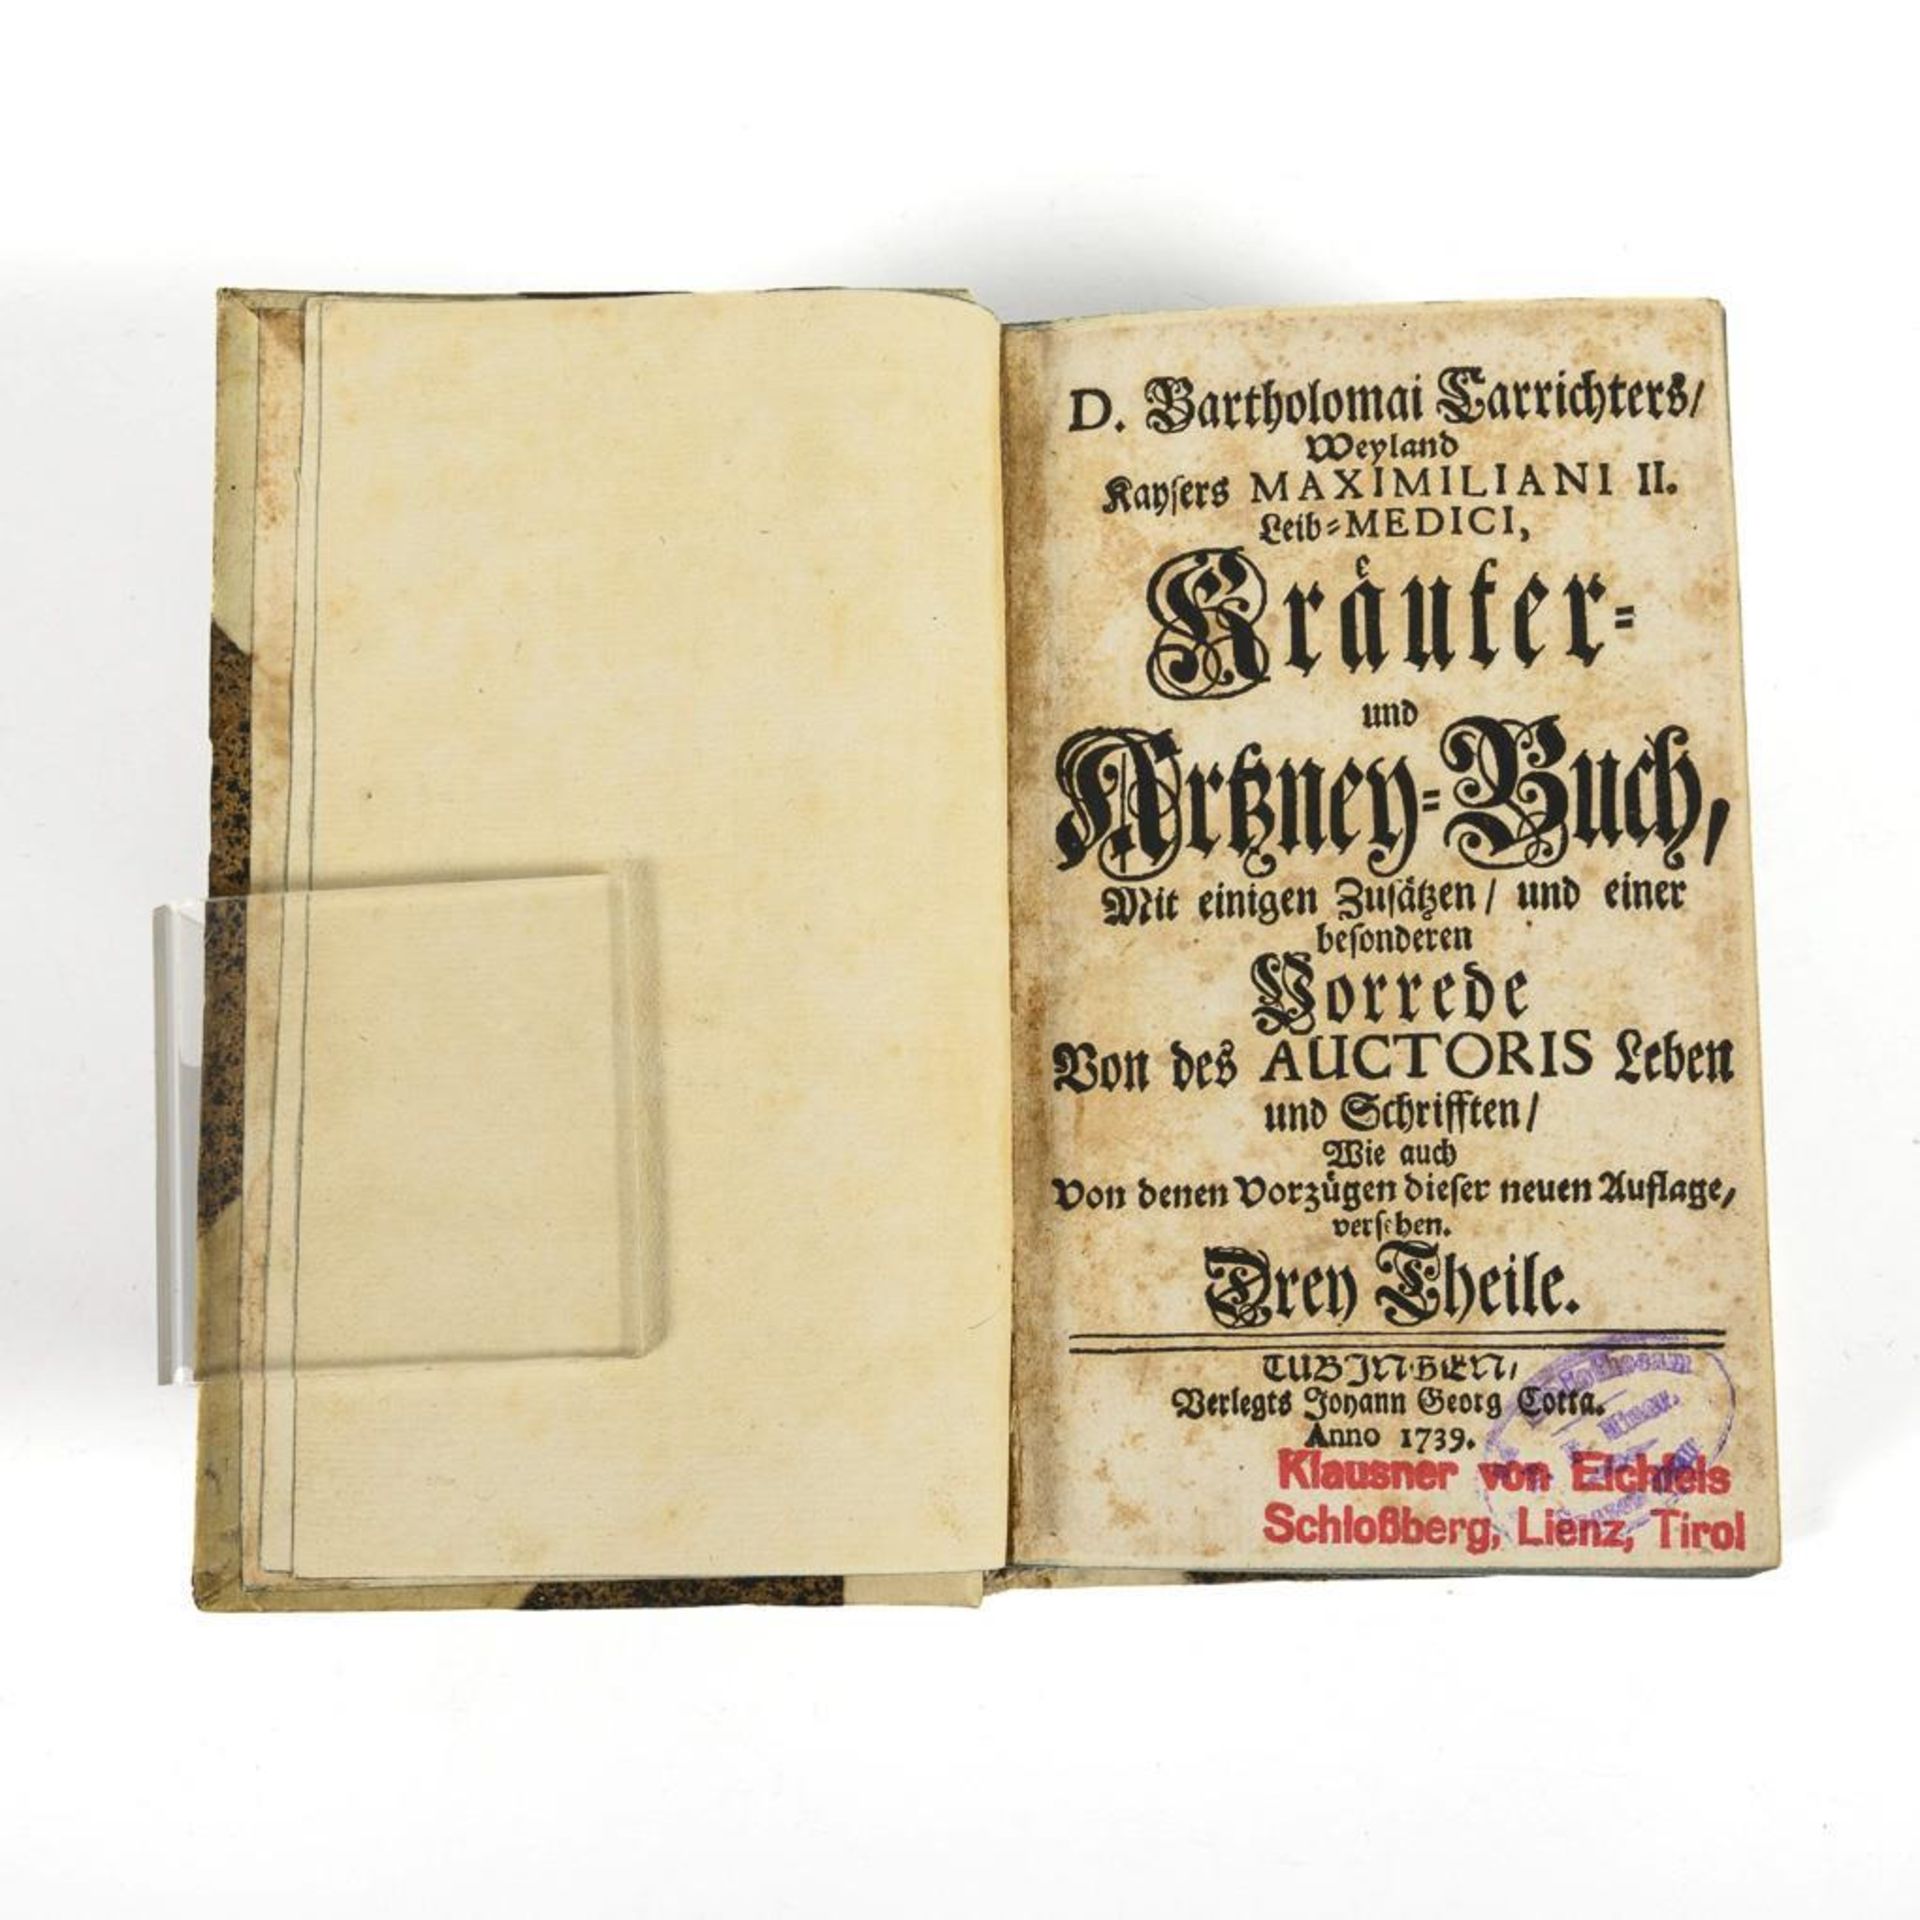 CARRICHTER, Bartholomai. "Kräuter - und Artzney-Buch".